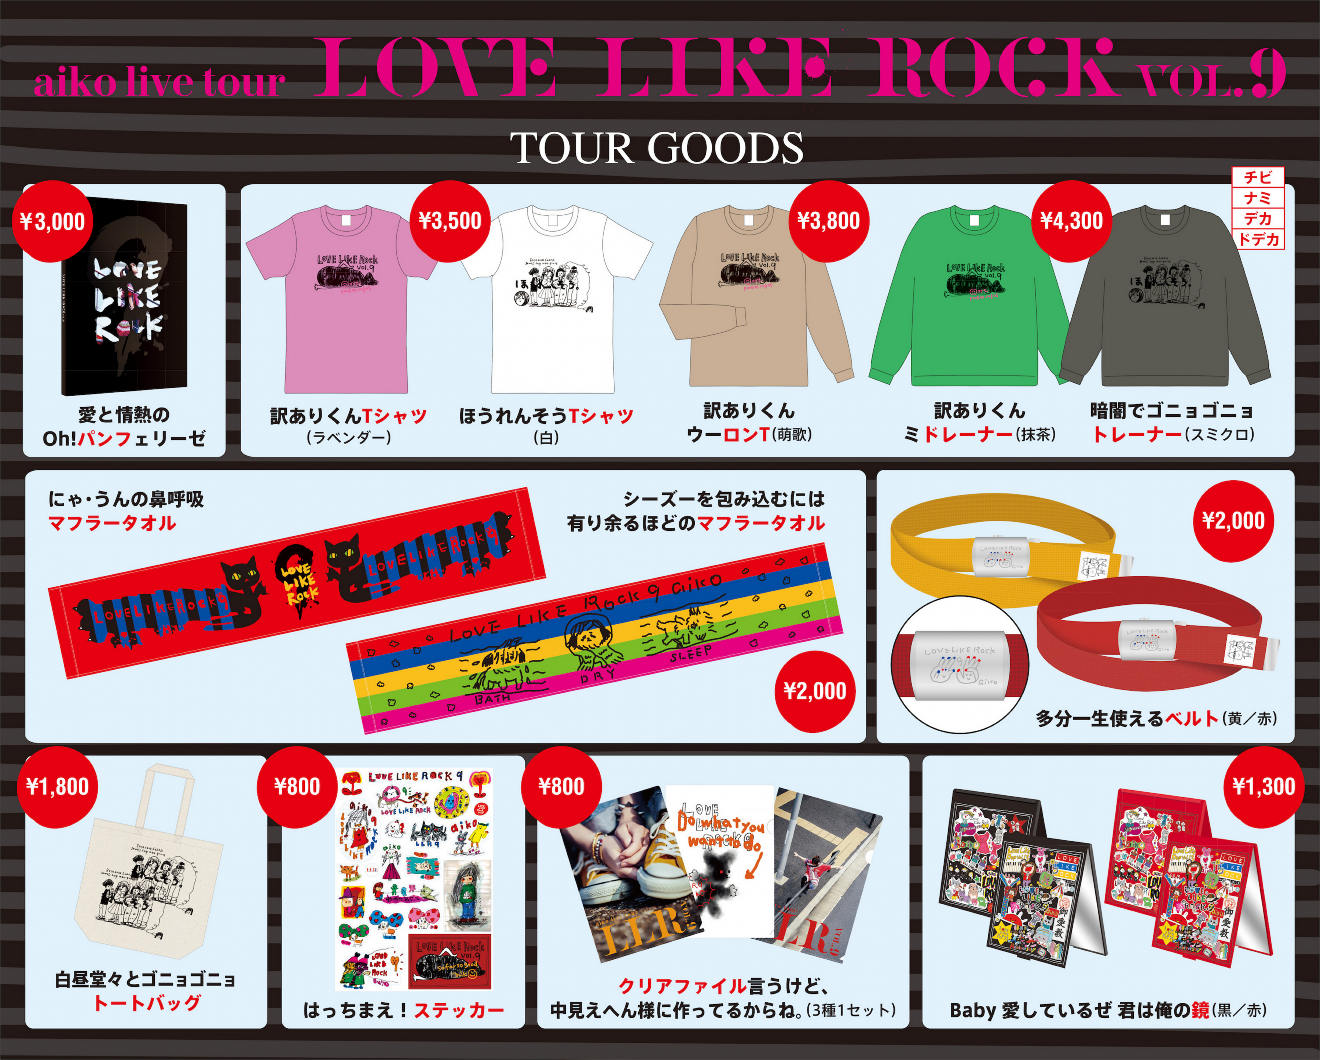 aiko LOVE LIKE POP vol.10 パンフレット - ミュージシャン